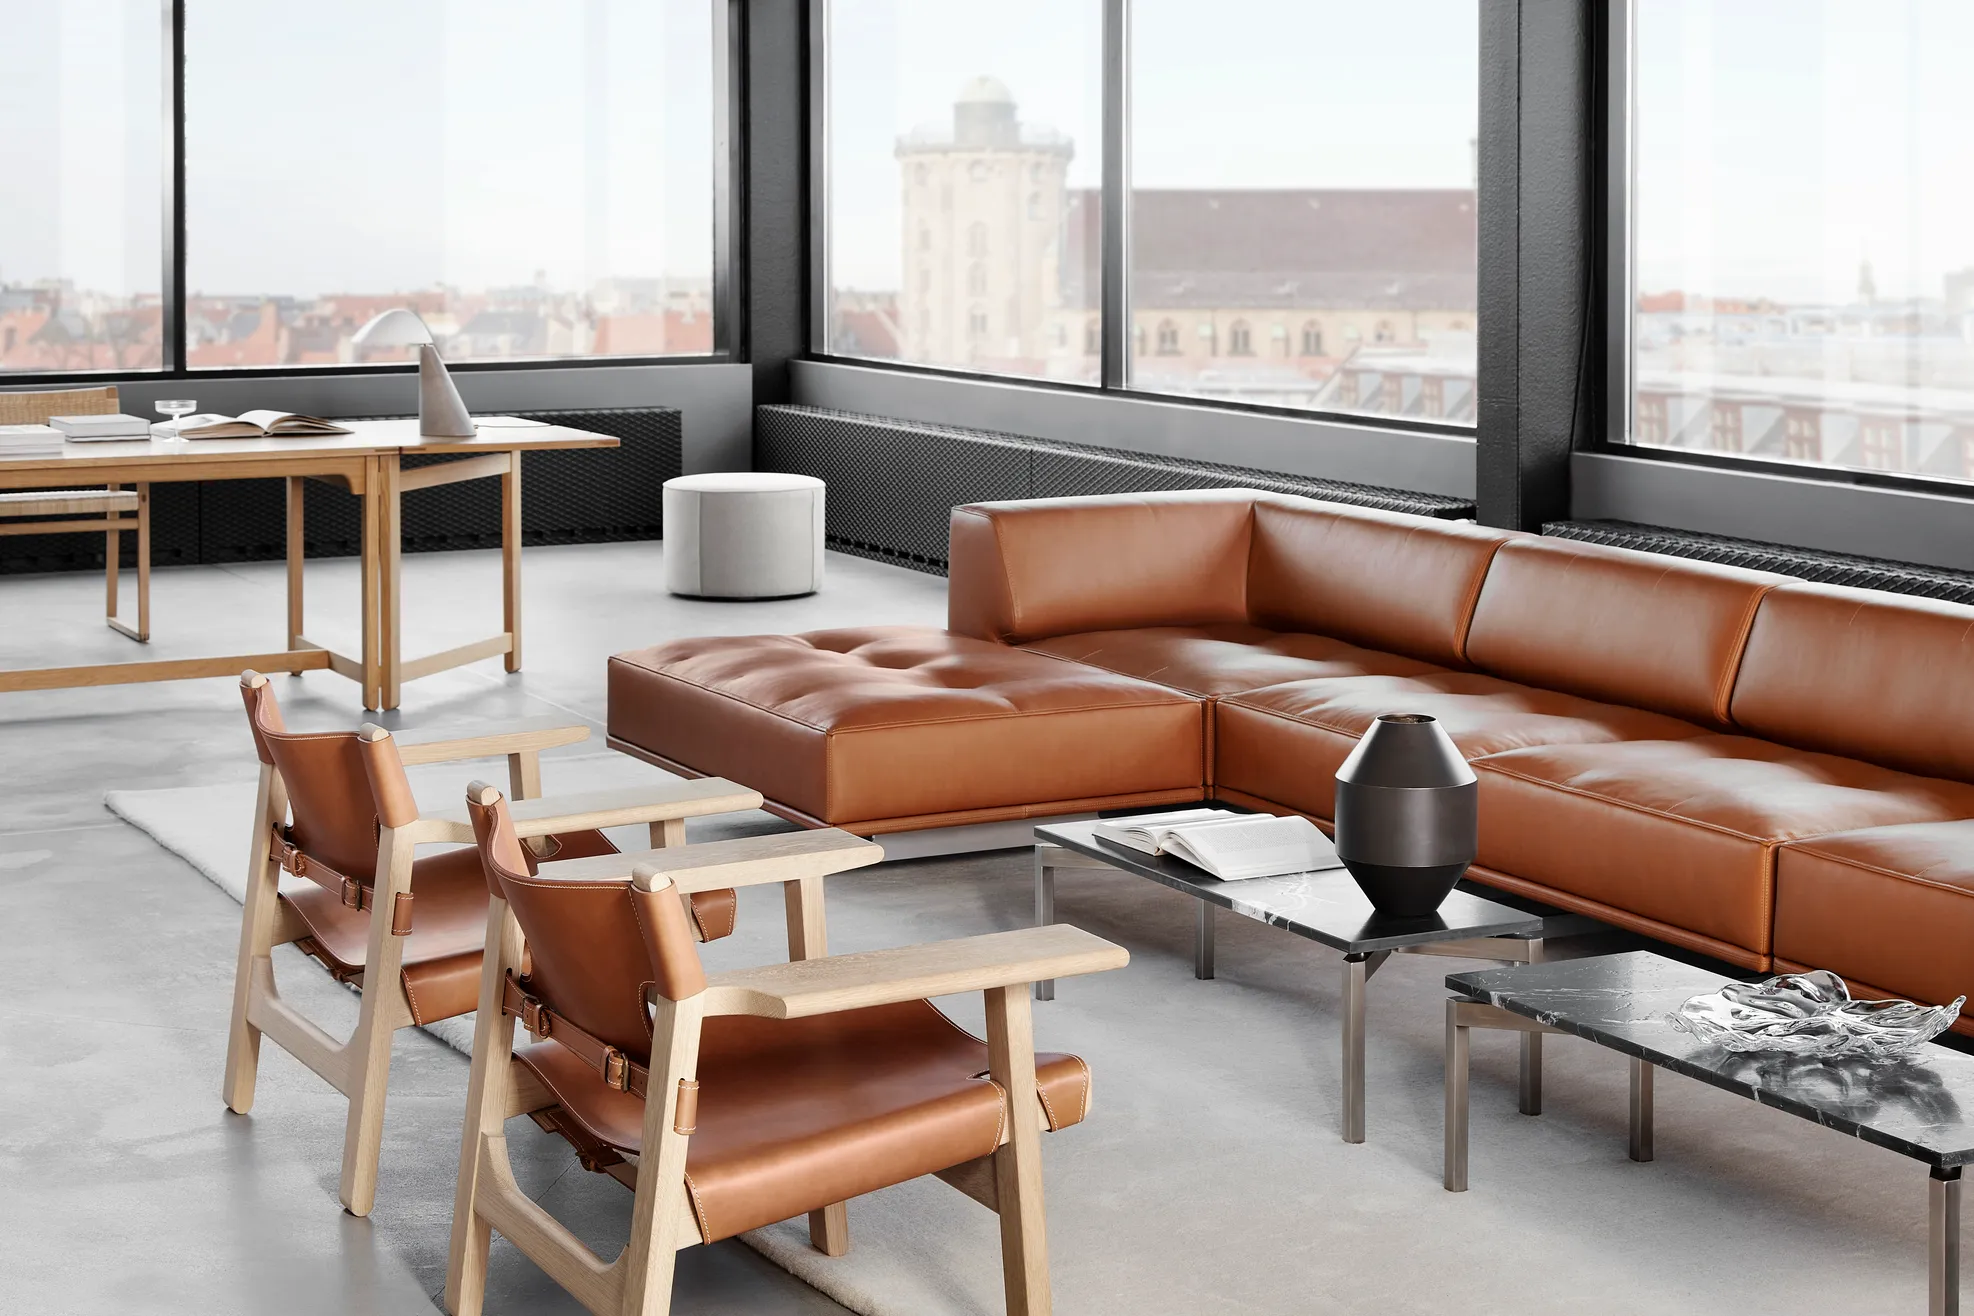 Repaste tyngdekraft Prestige EJ66 sofabord med marmor | Køb sofabord 45x130 fra Erik Jørgensen her